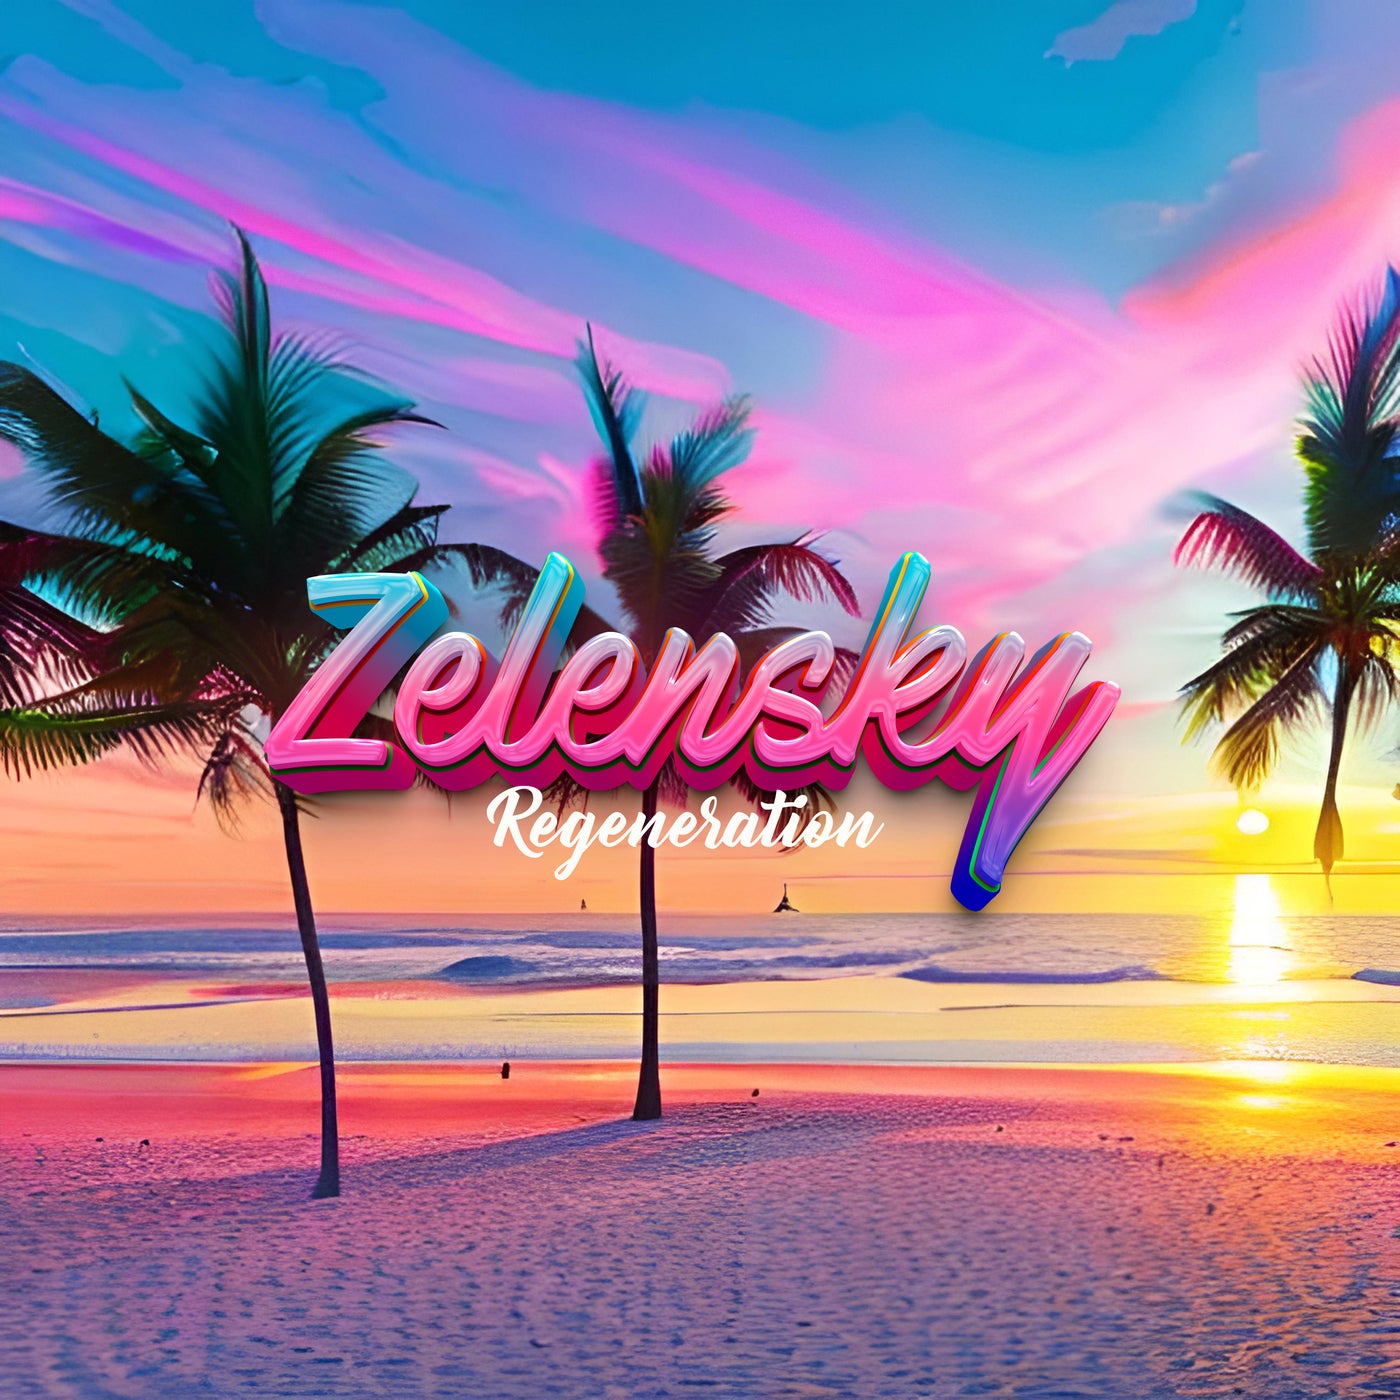 Zelensky – Regeneration [10275876]